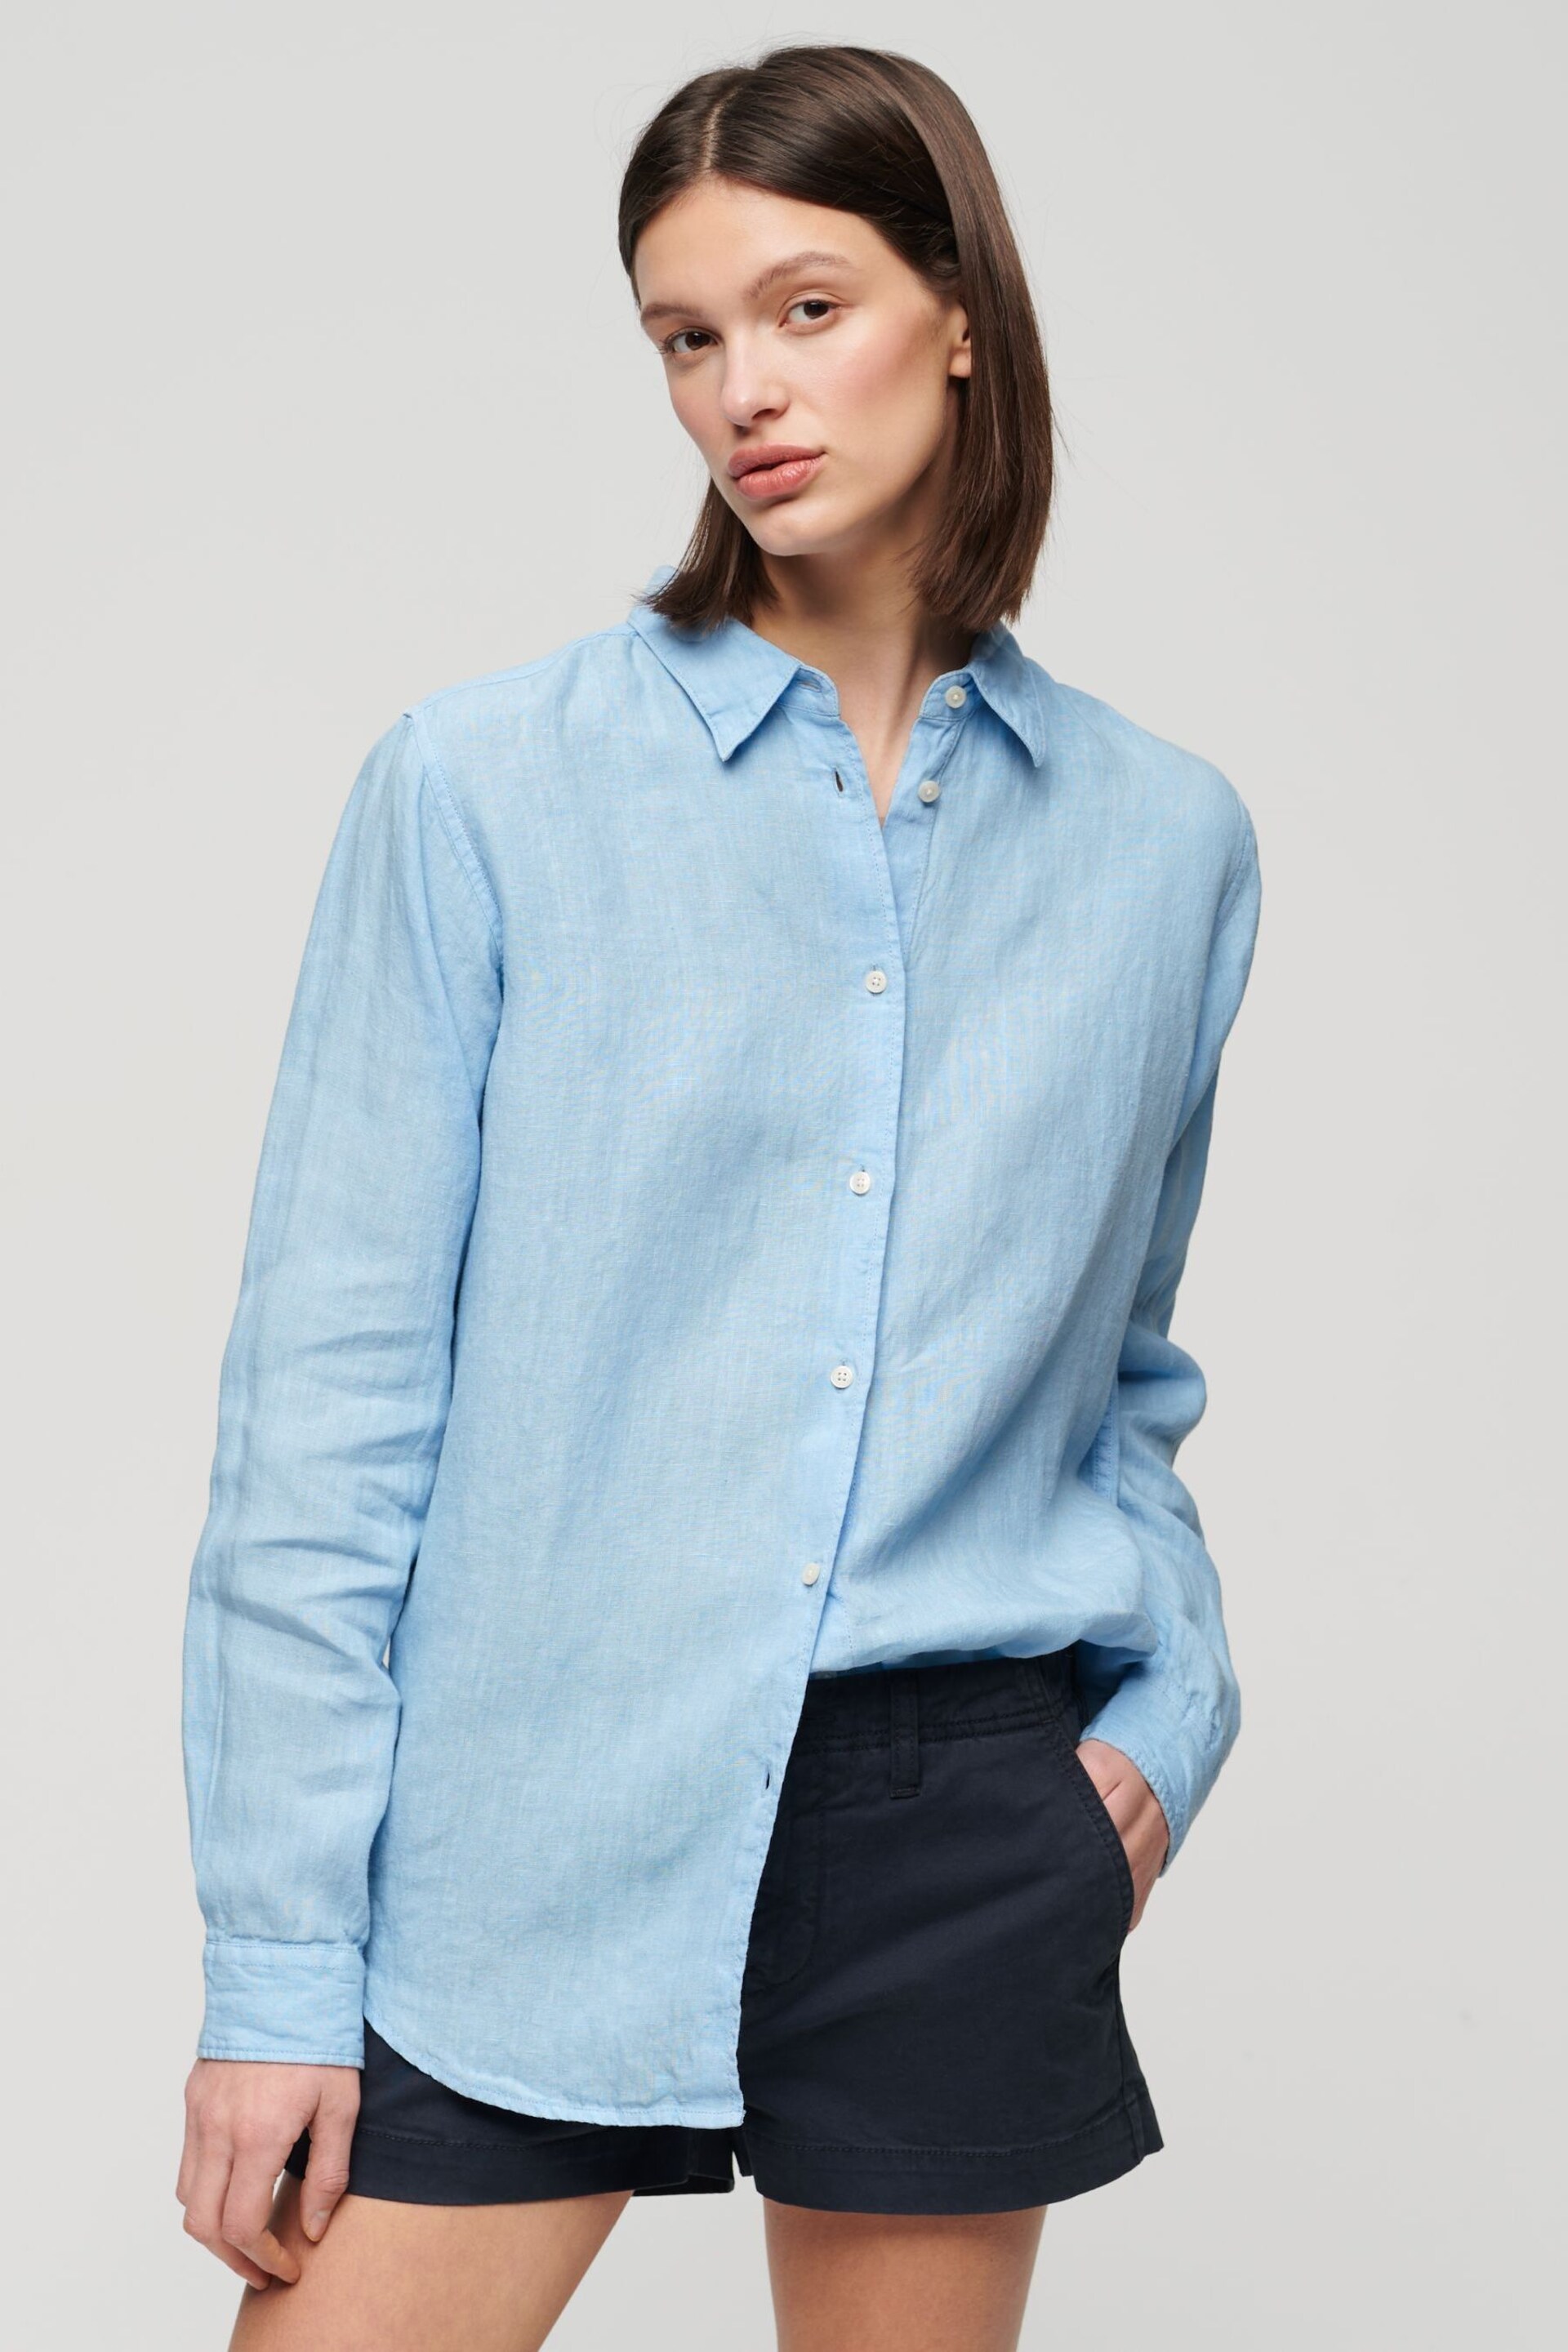 Superdry Blue Casual Linen Boyfriend Shirt - Image 1 of 5